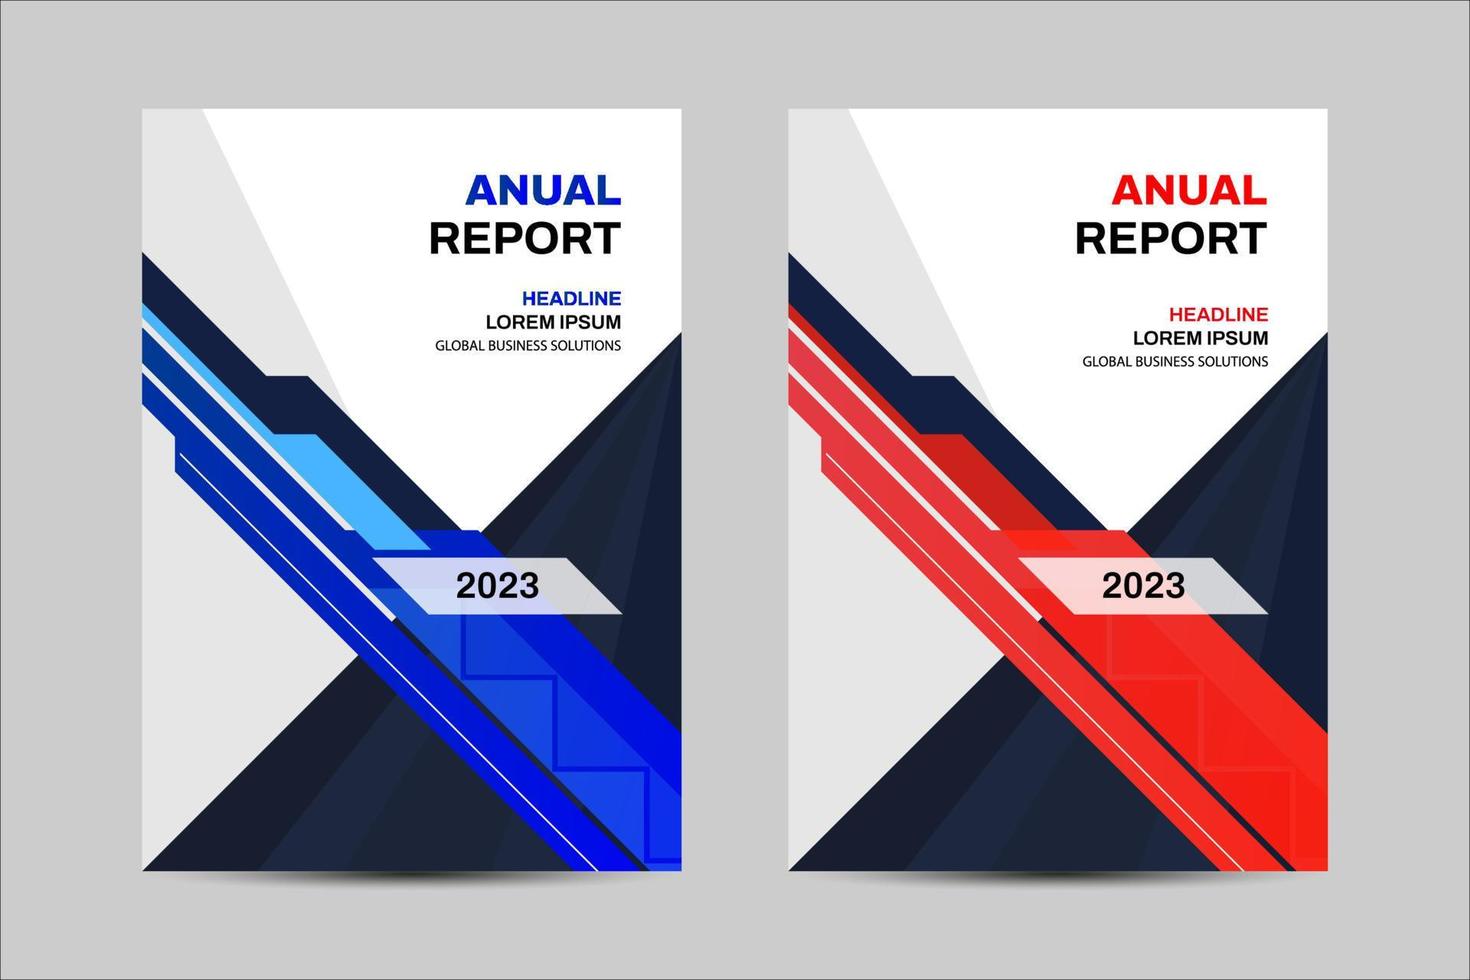 Template vector design for Brochure, AnnualReport, Magazine, Poster, Corporate Presentation, Portfolio, Flyer, infographic,